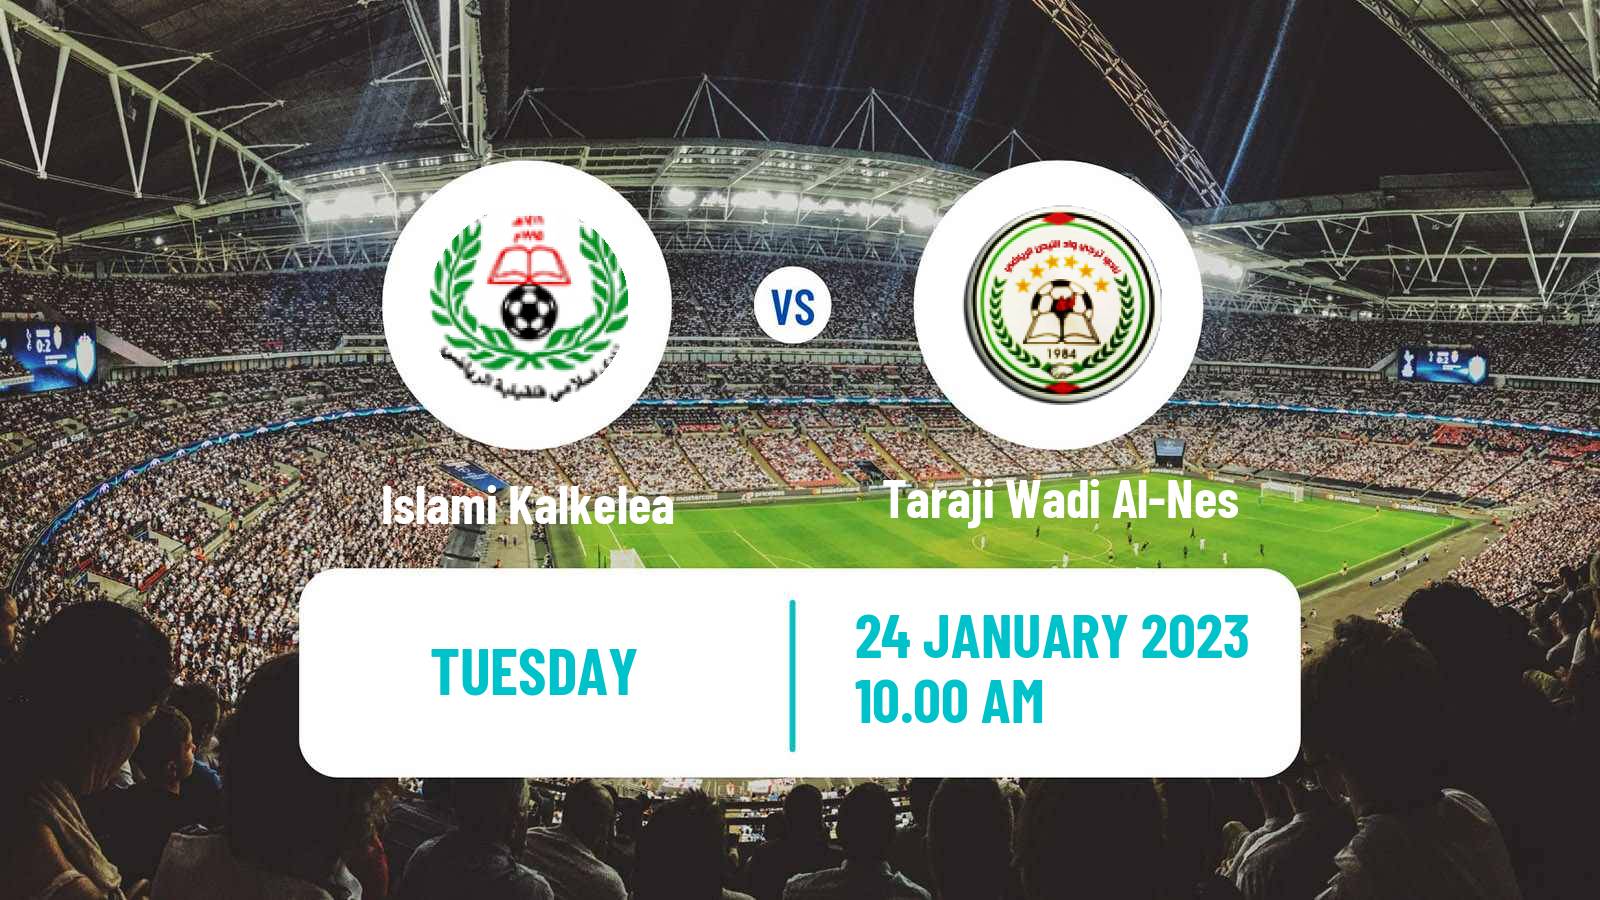 Soccer Palestinian Premier League Islami Kalkelea - Taraji Wadi Al-Nes